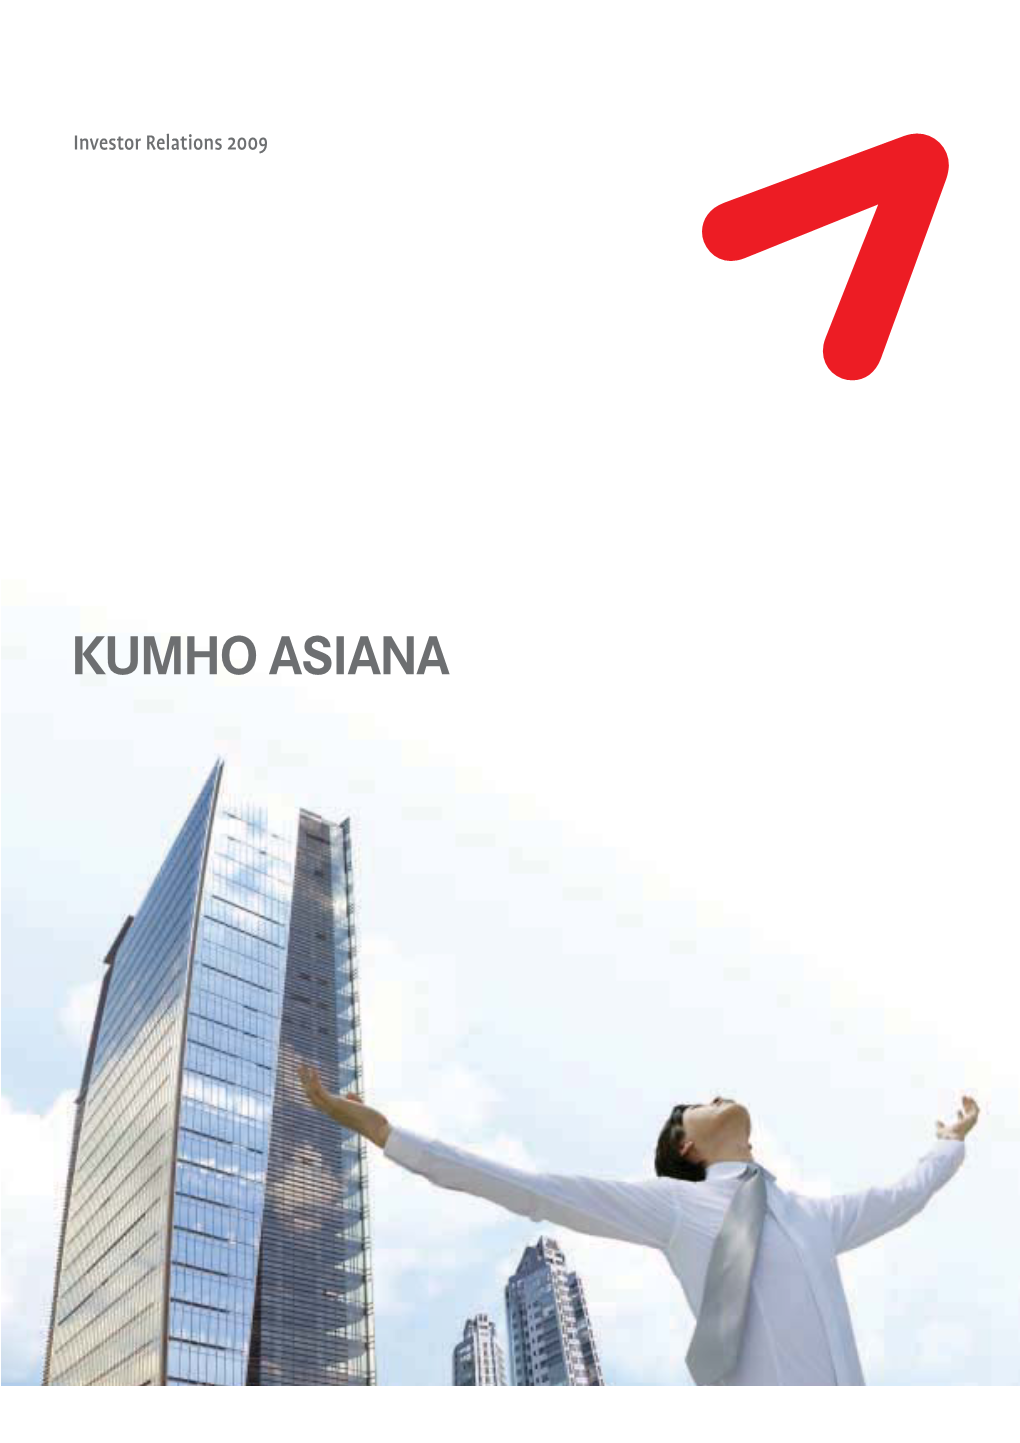 Kumho Petrochemical Asiana Airlines Kumho Tires Daewoo E&C Korea Express Kumho Asiana Group